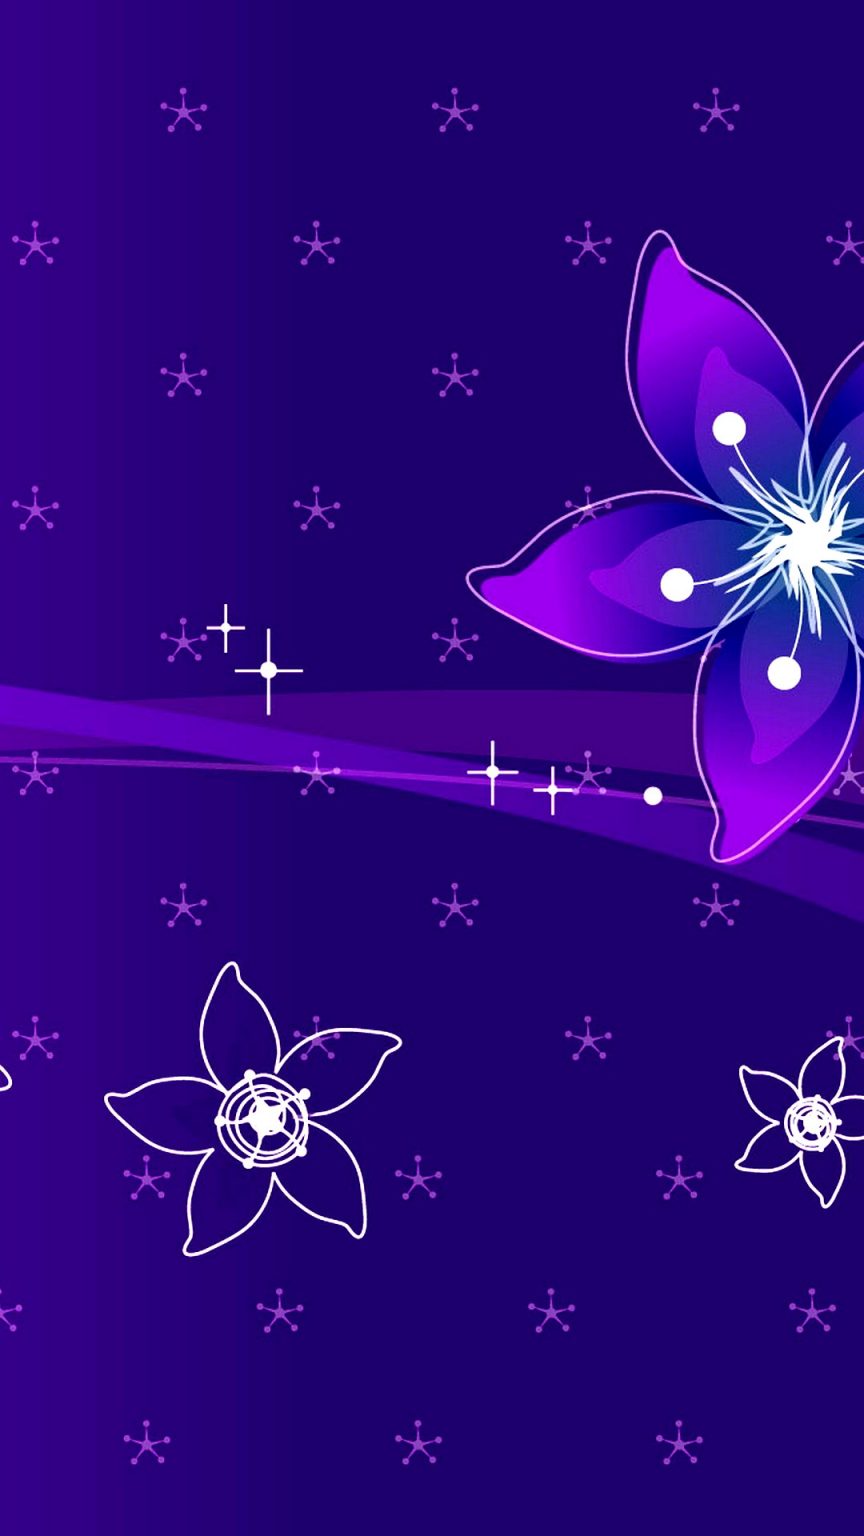 Purple iPhone Wallpaper Tumblr - Cute iPhone Wallpaper